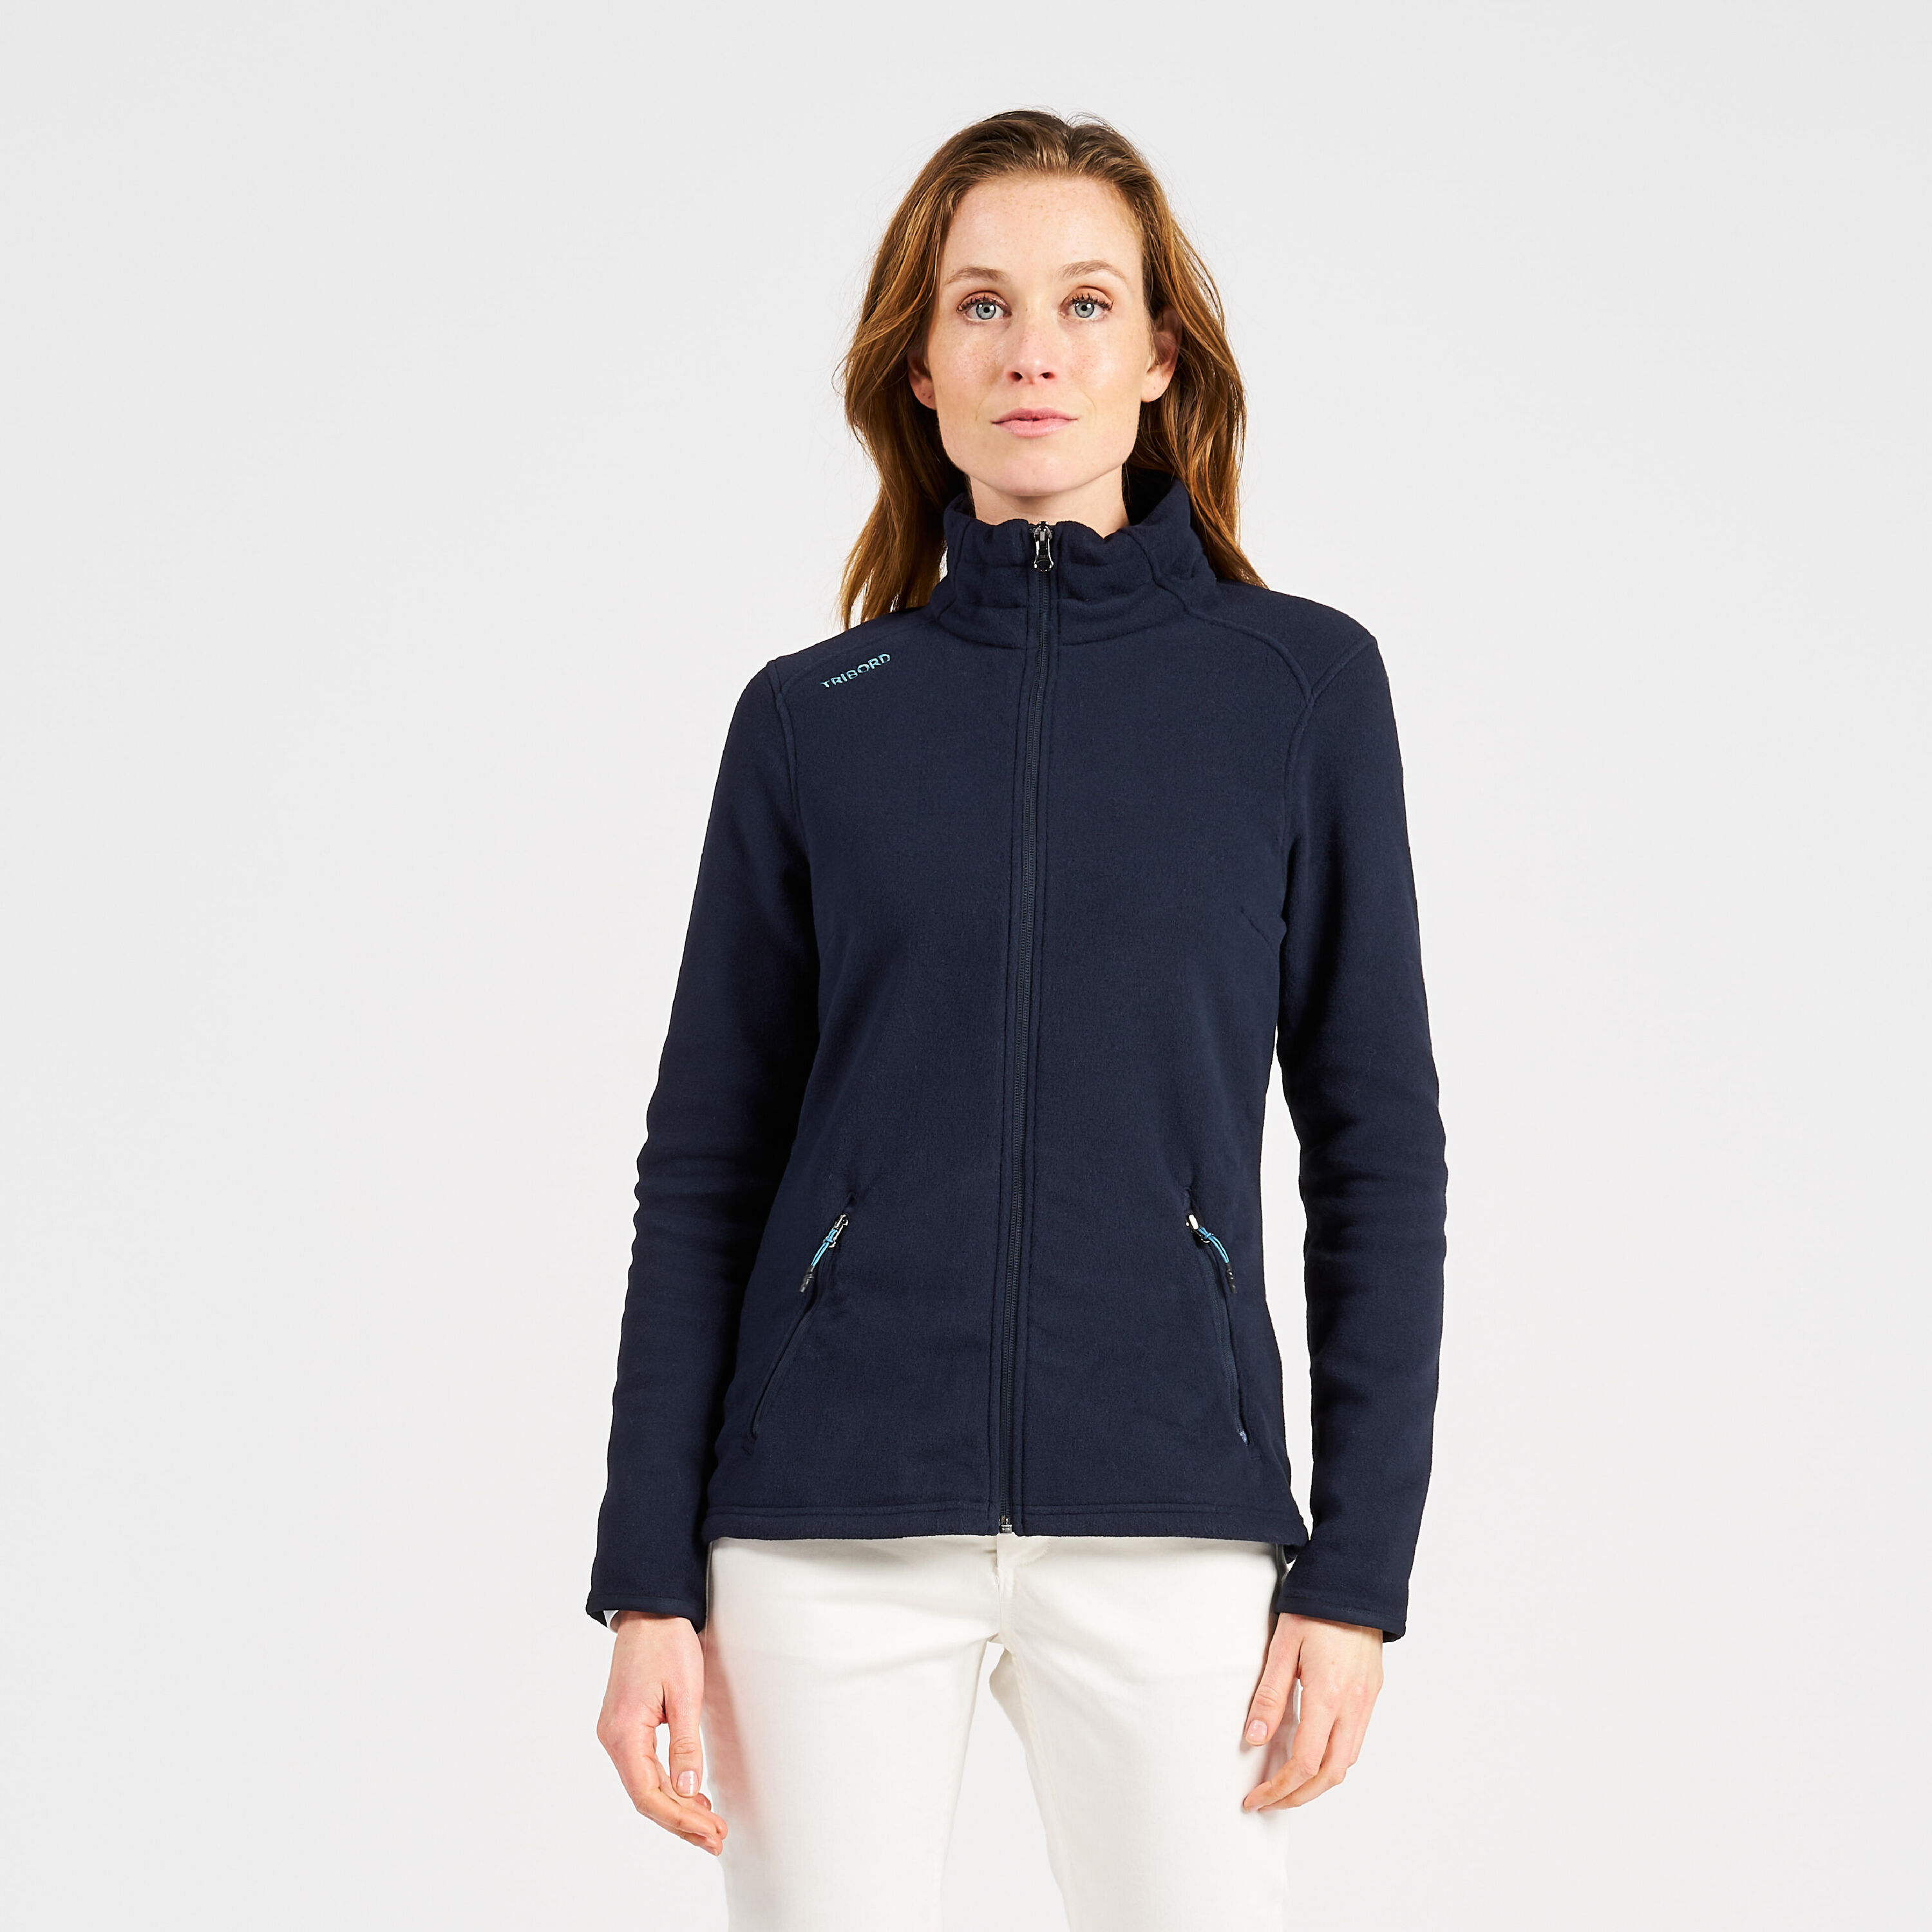 TRIBORD Women warm fleece sailing jacket 100 - Navy blue